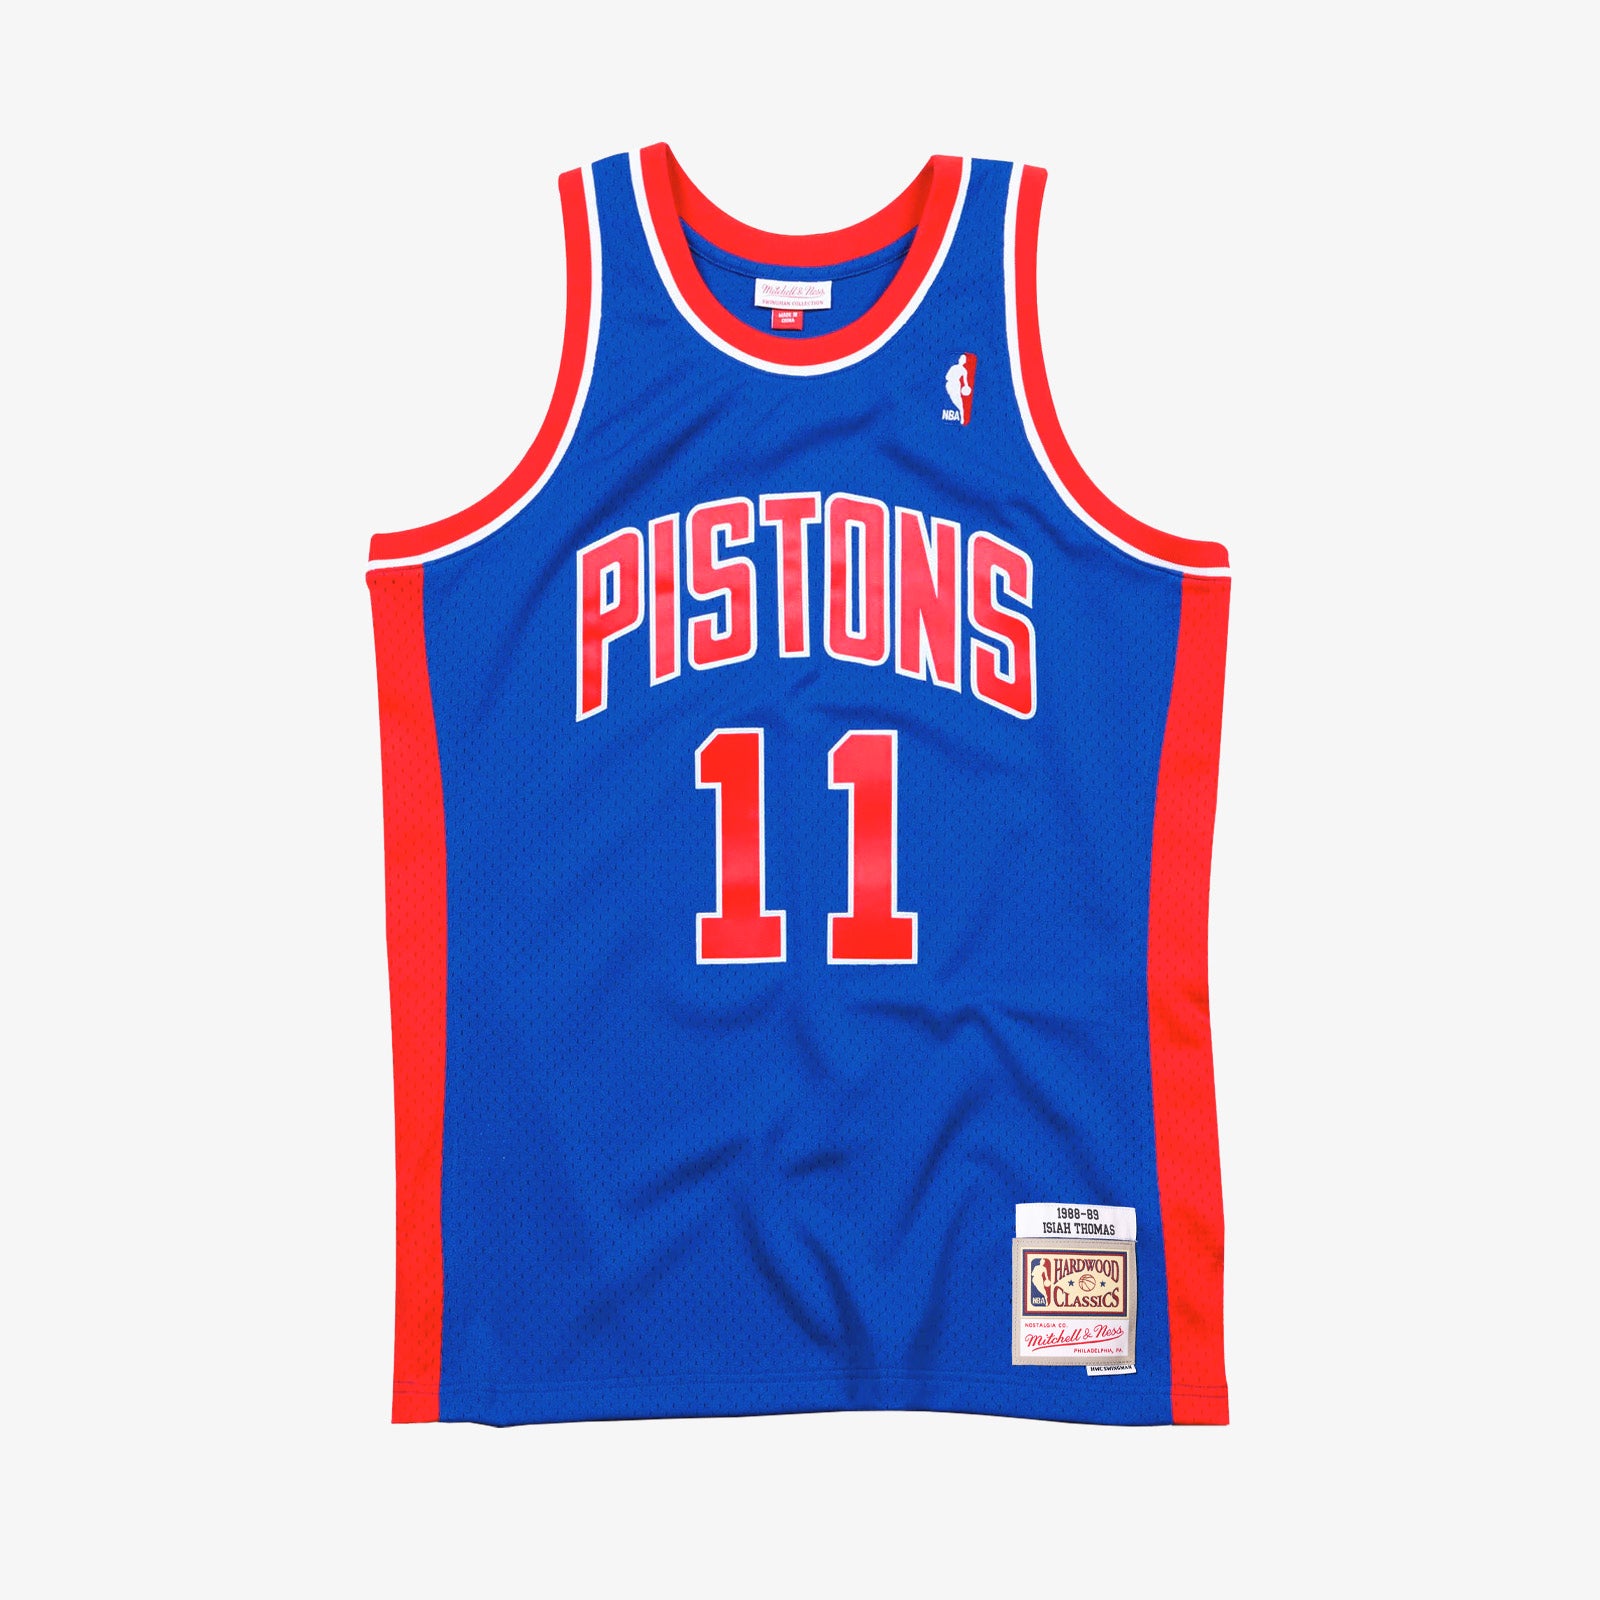  Pistons Jersey